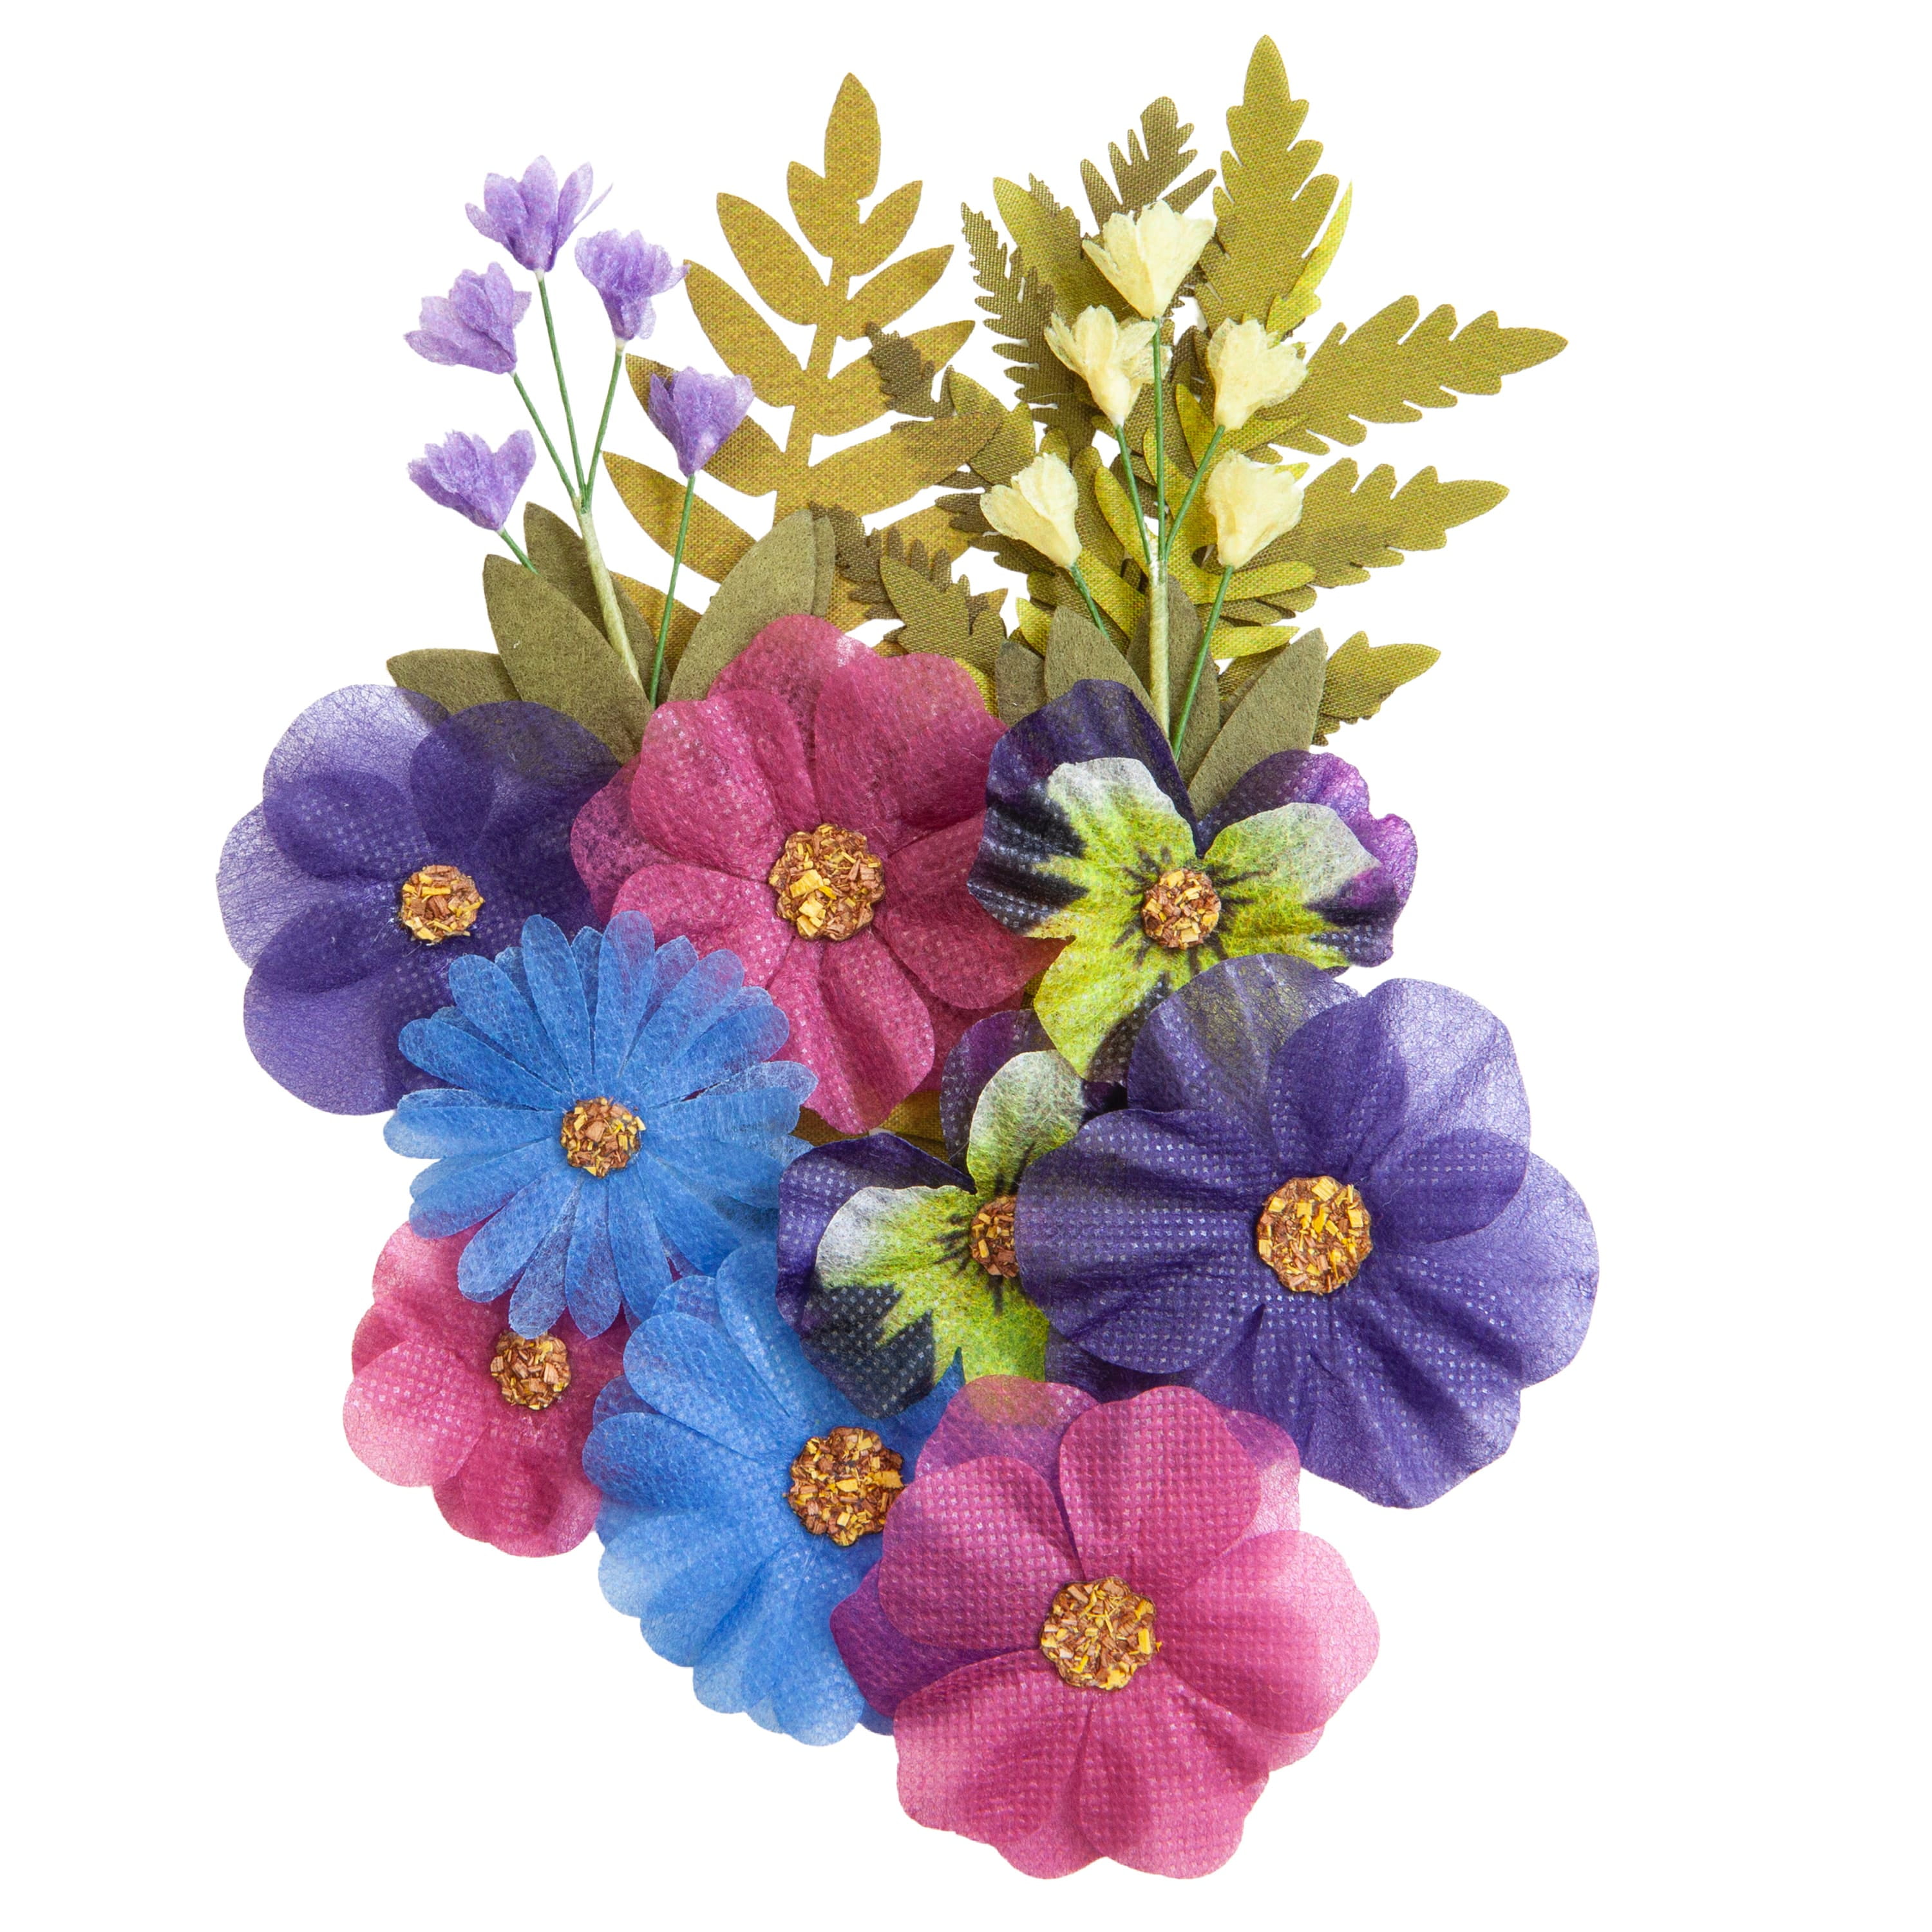 150pcs Felt Flowers Fabric Flower Embellishments For DIY Crafts